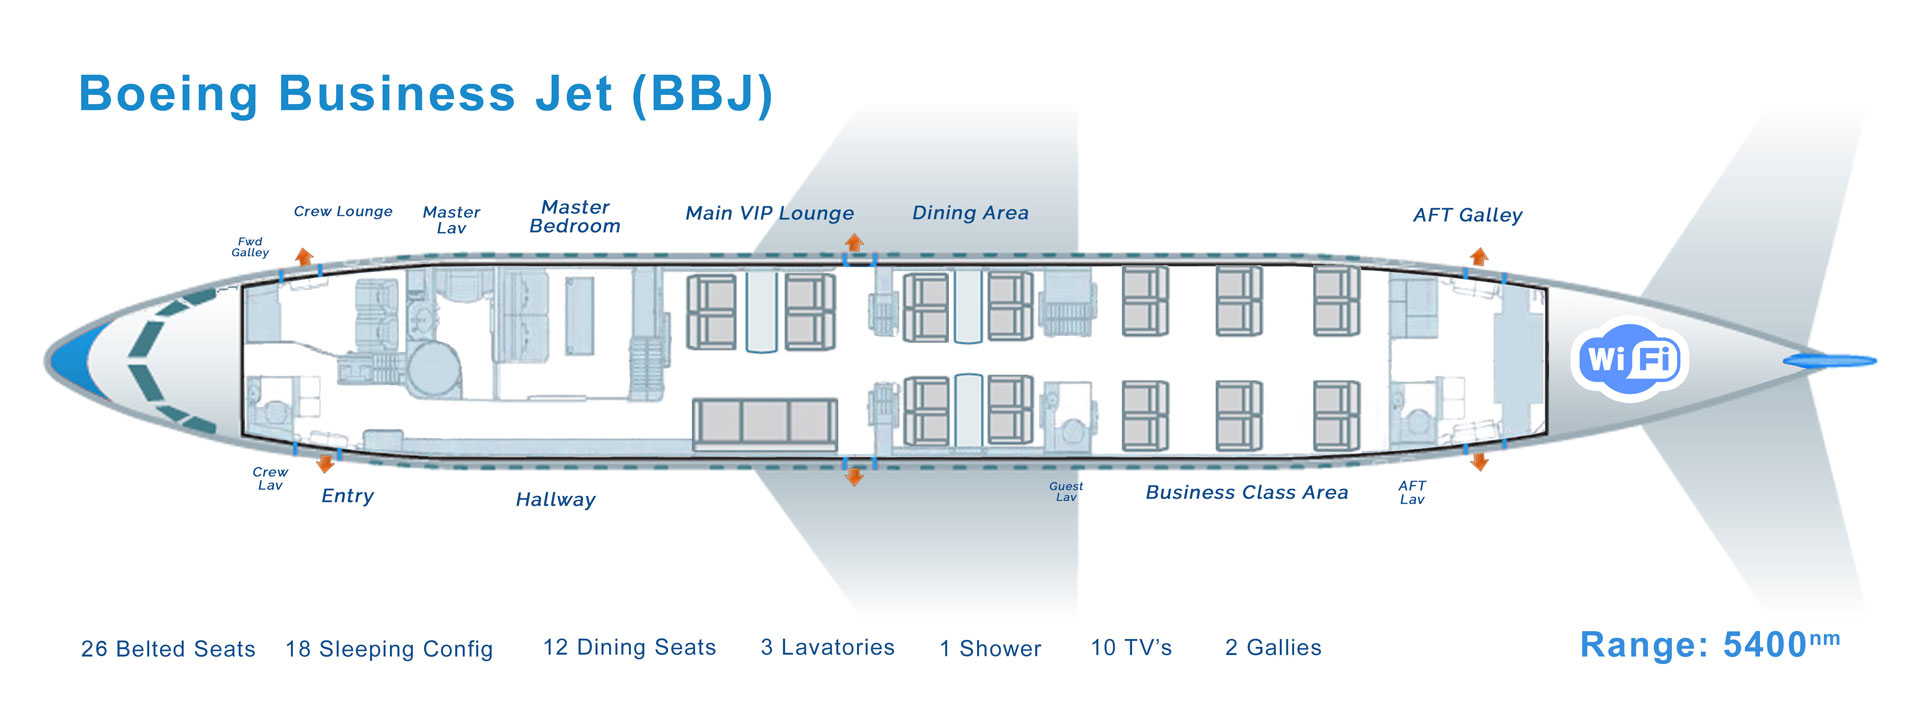 Boeing BBJ Max » Sky Services Jet&Yacht